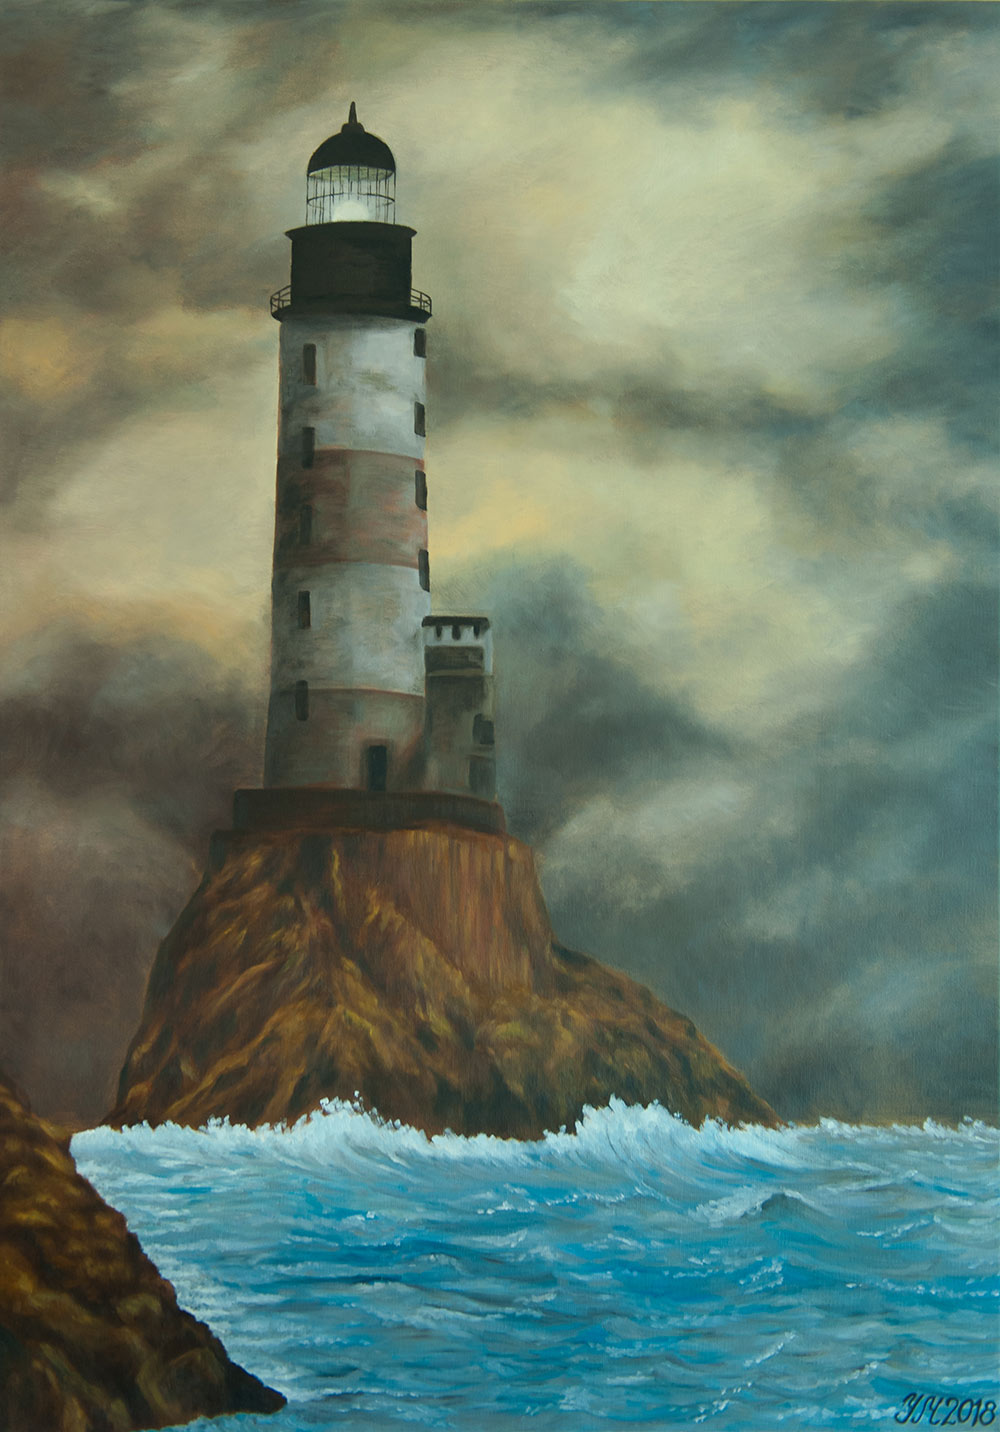 Buy painting online Singapore Exquisite Art Yulia McGrath Atomic Lighthouse